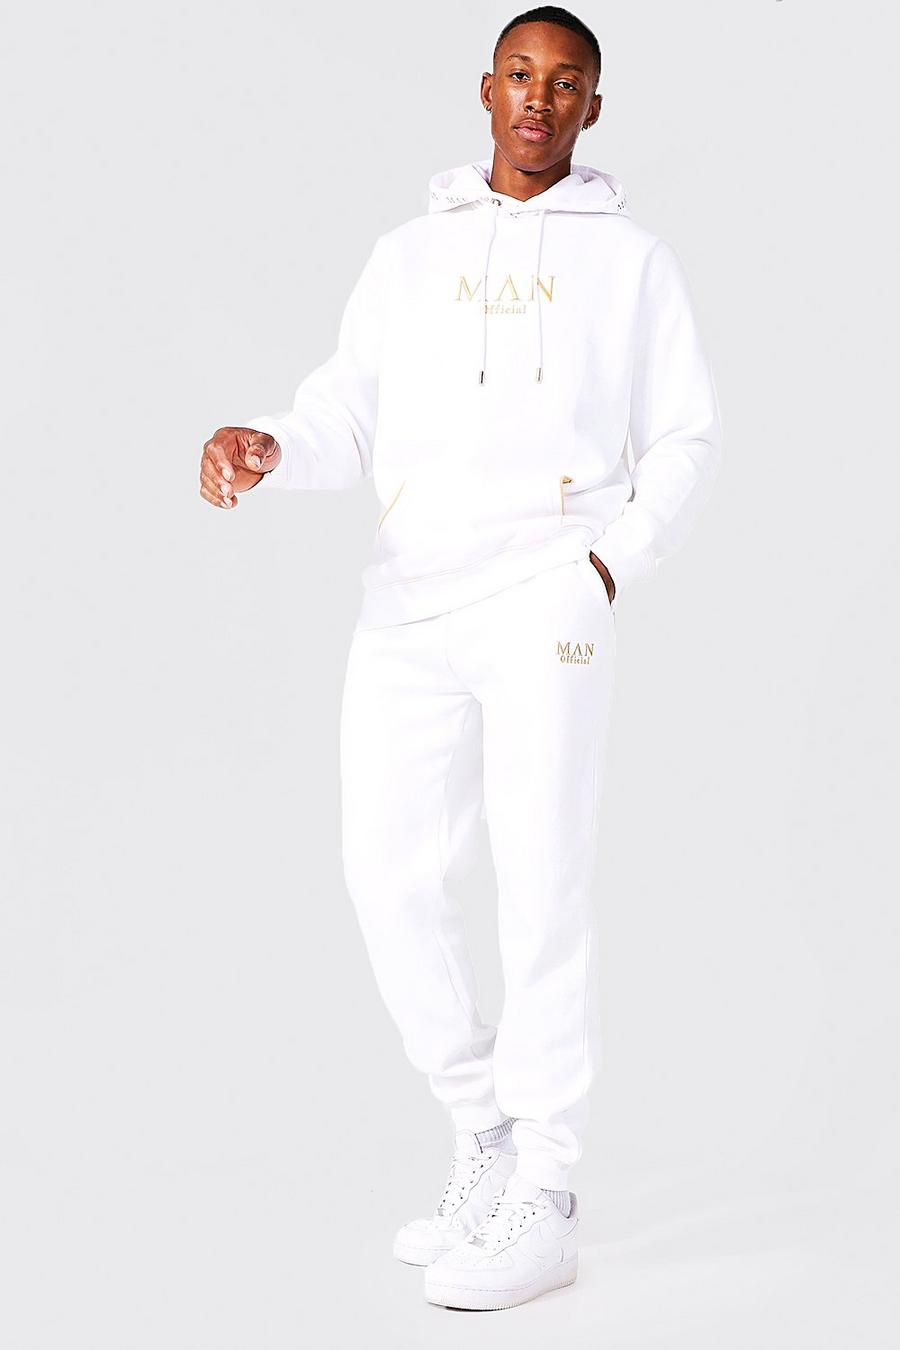 Man Gold Trainingsanzug mit Kapuze, White blanc